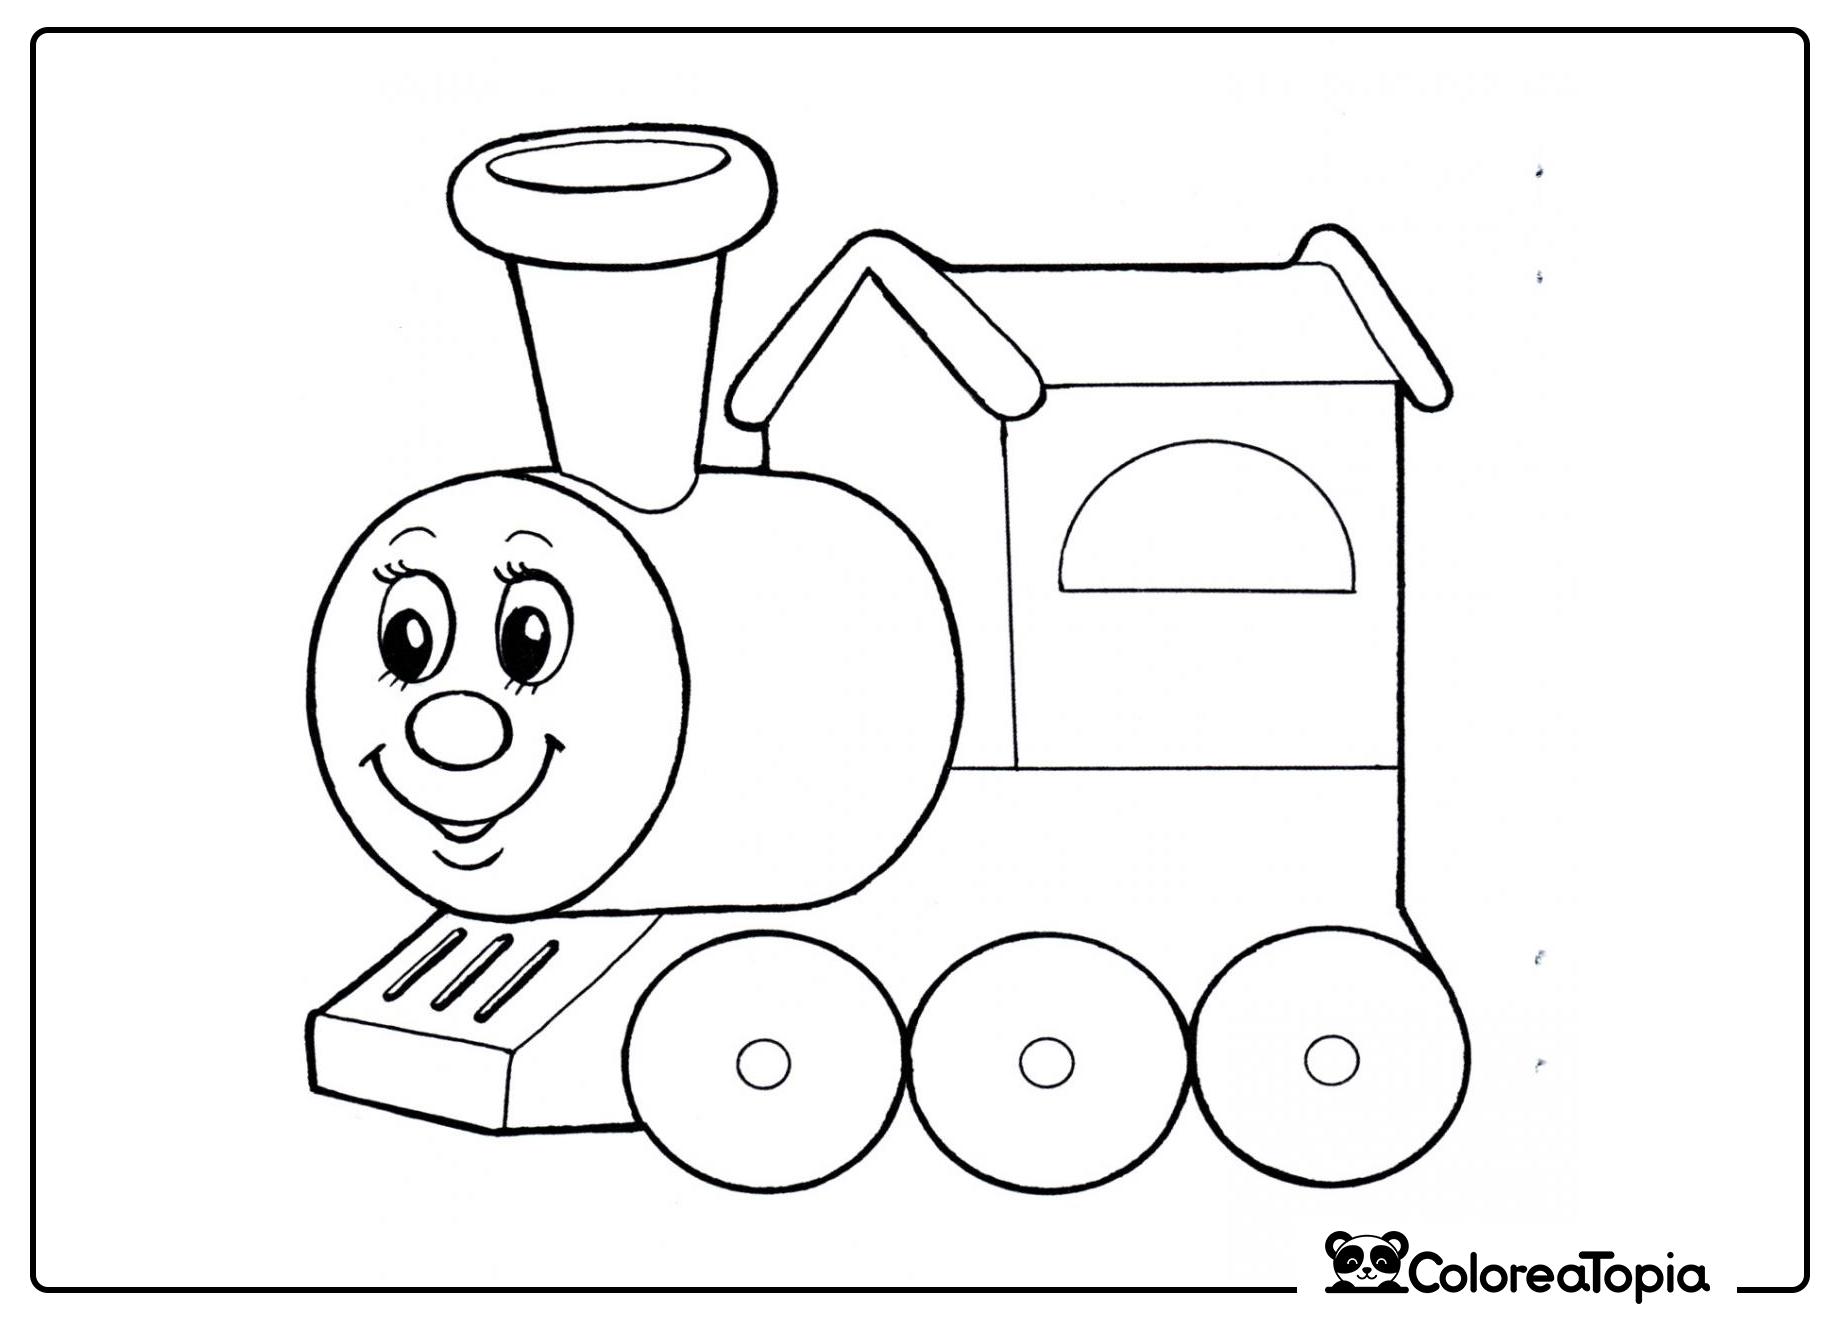 Tren de juguete - dibujo para colorear